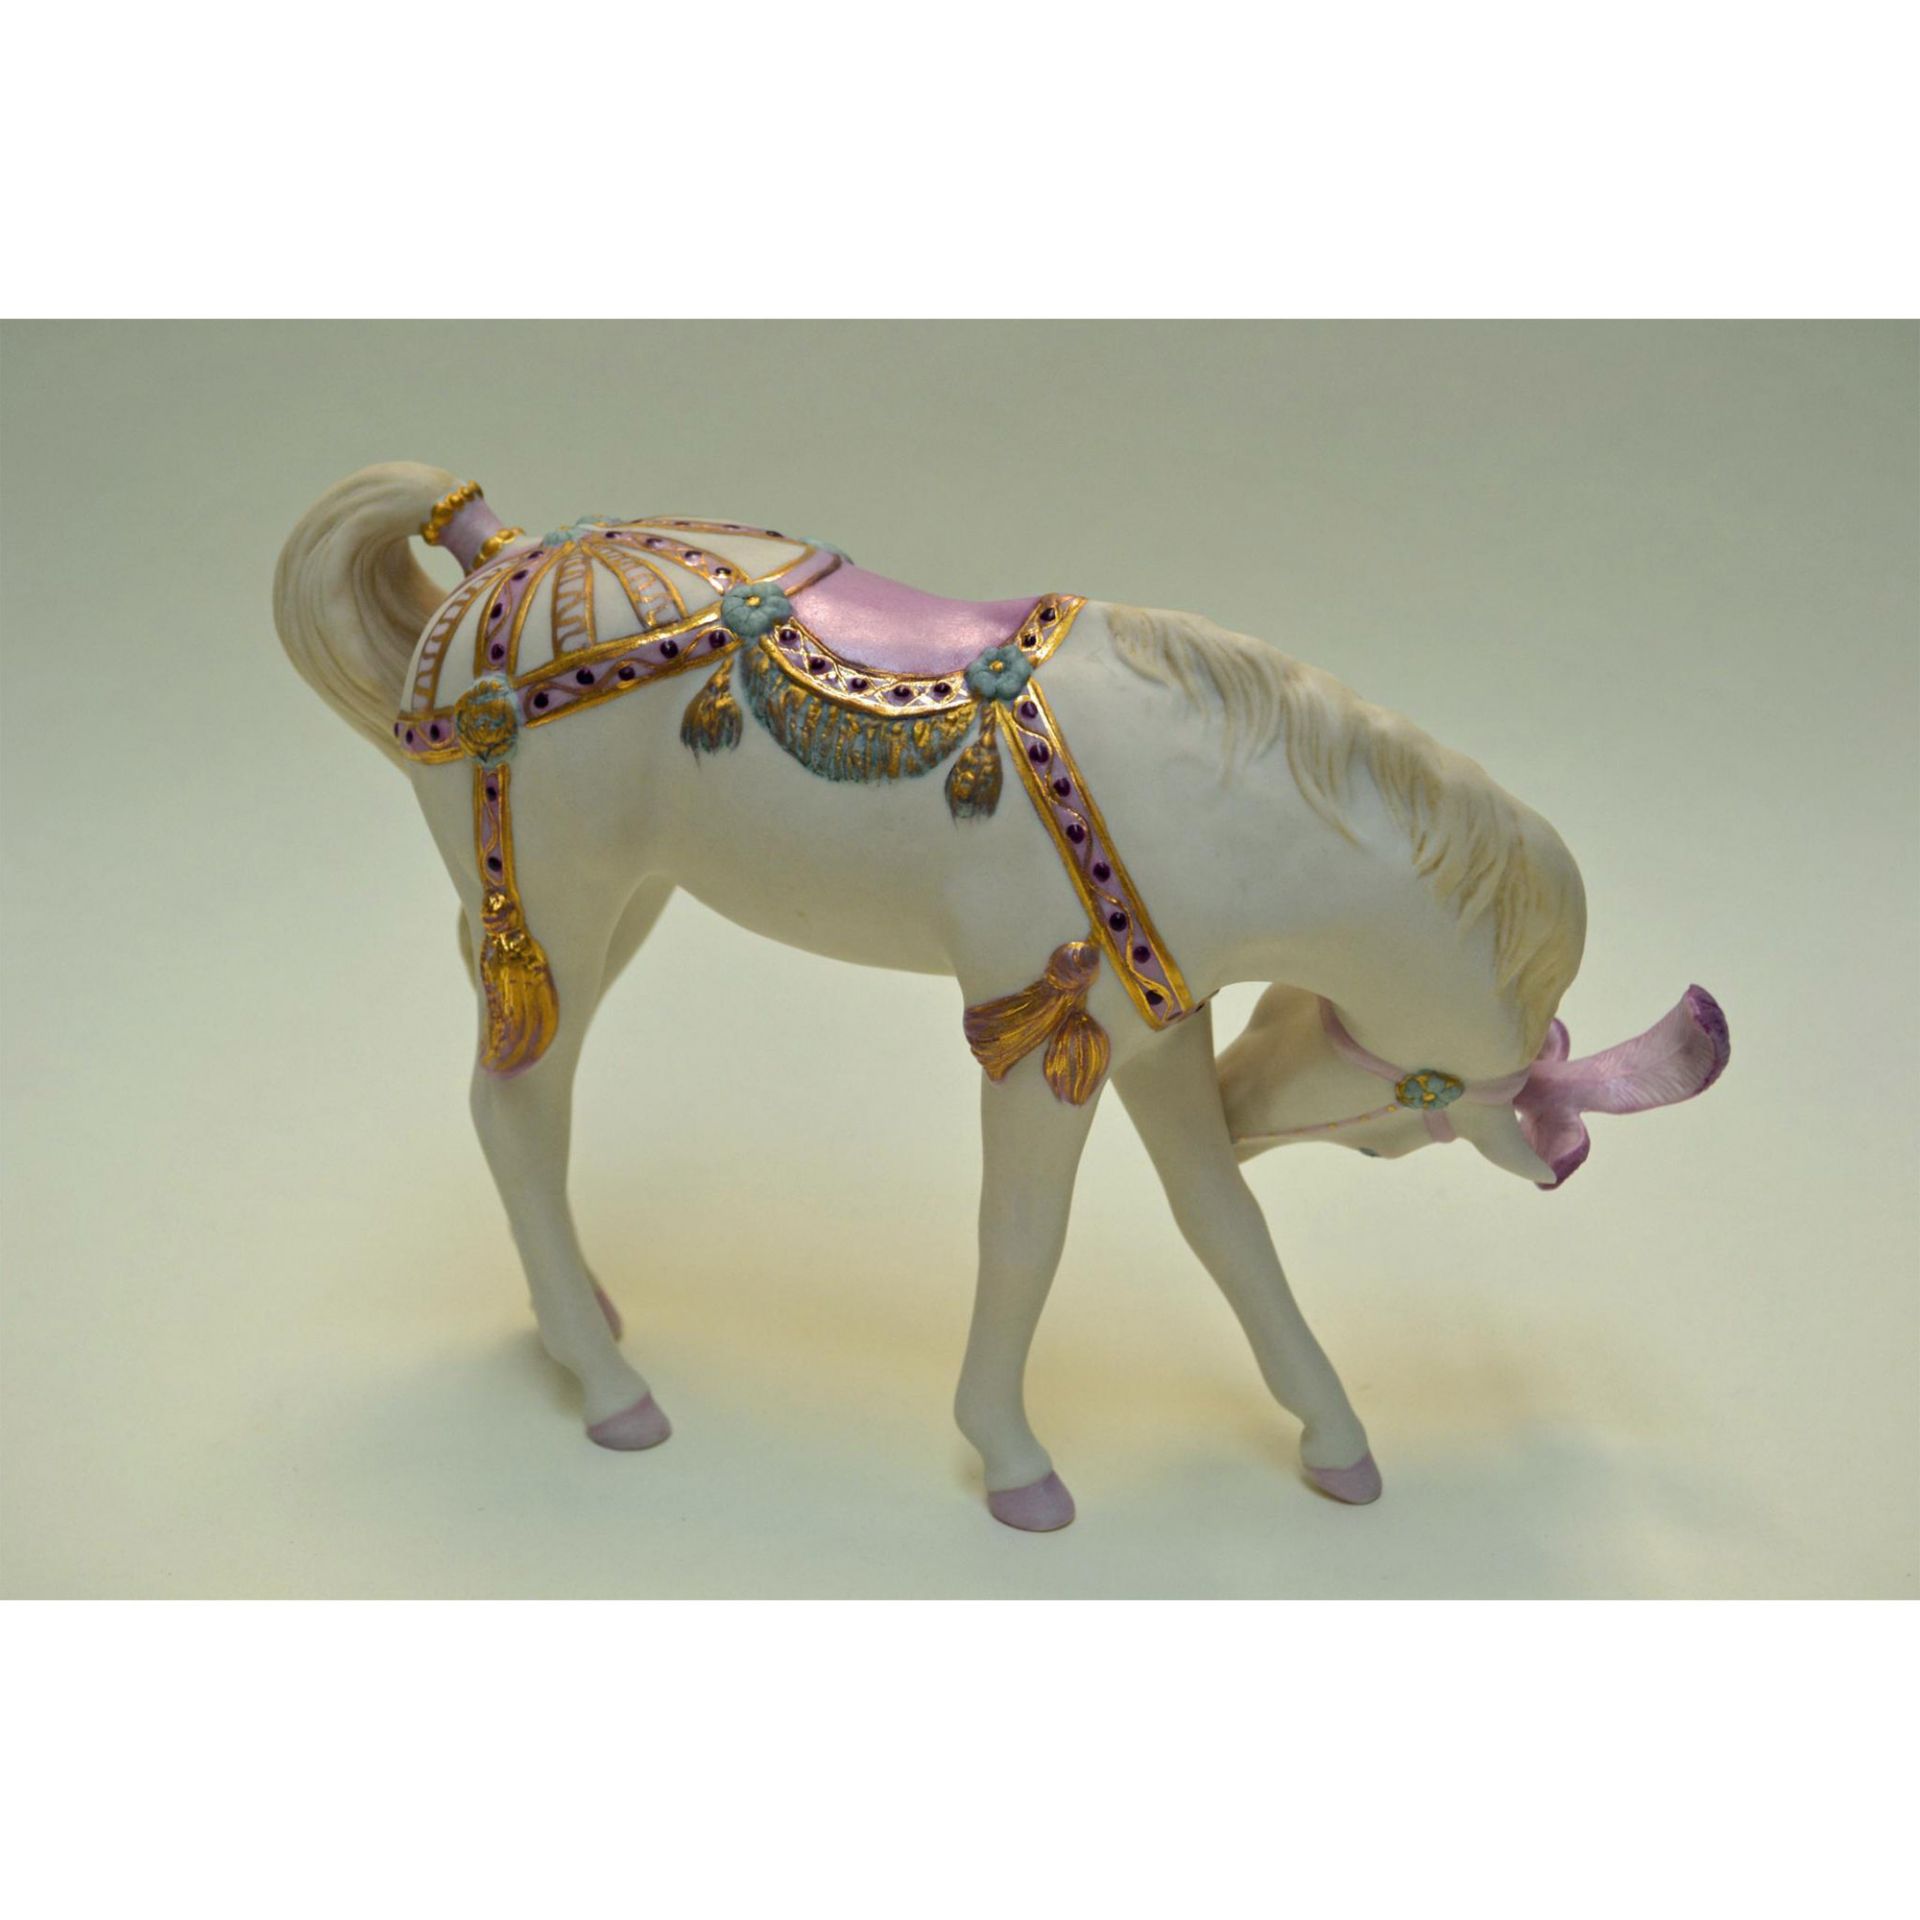 Cybis Porcelain Poppy The Performing Pony Figurine - Image 3 of 7